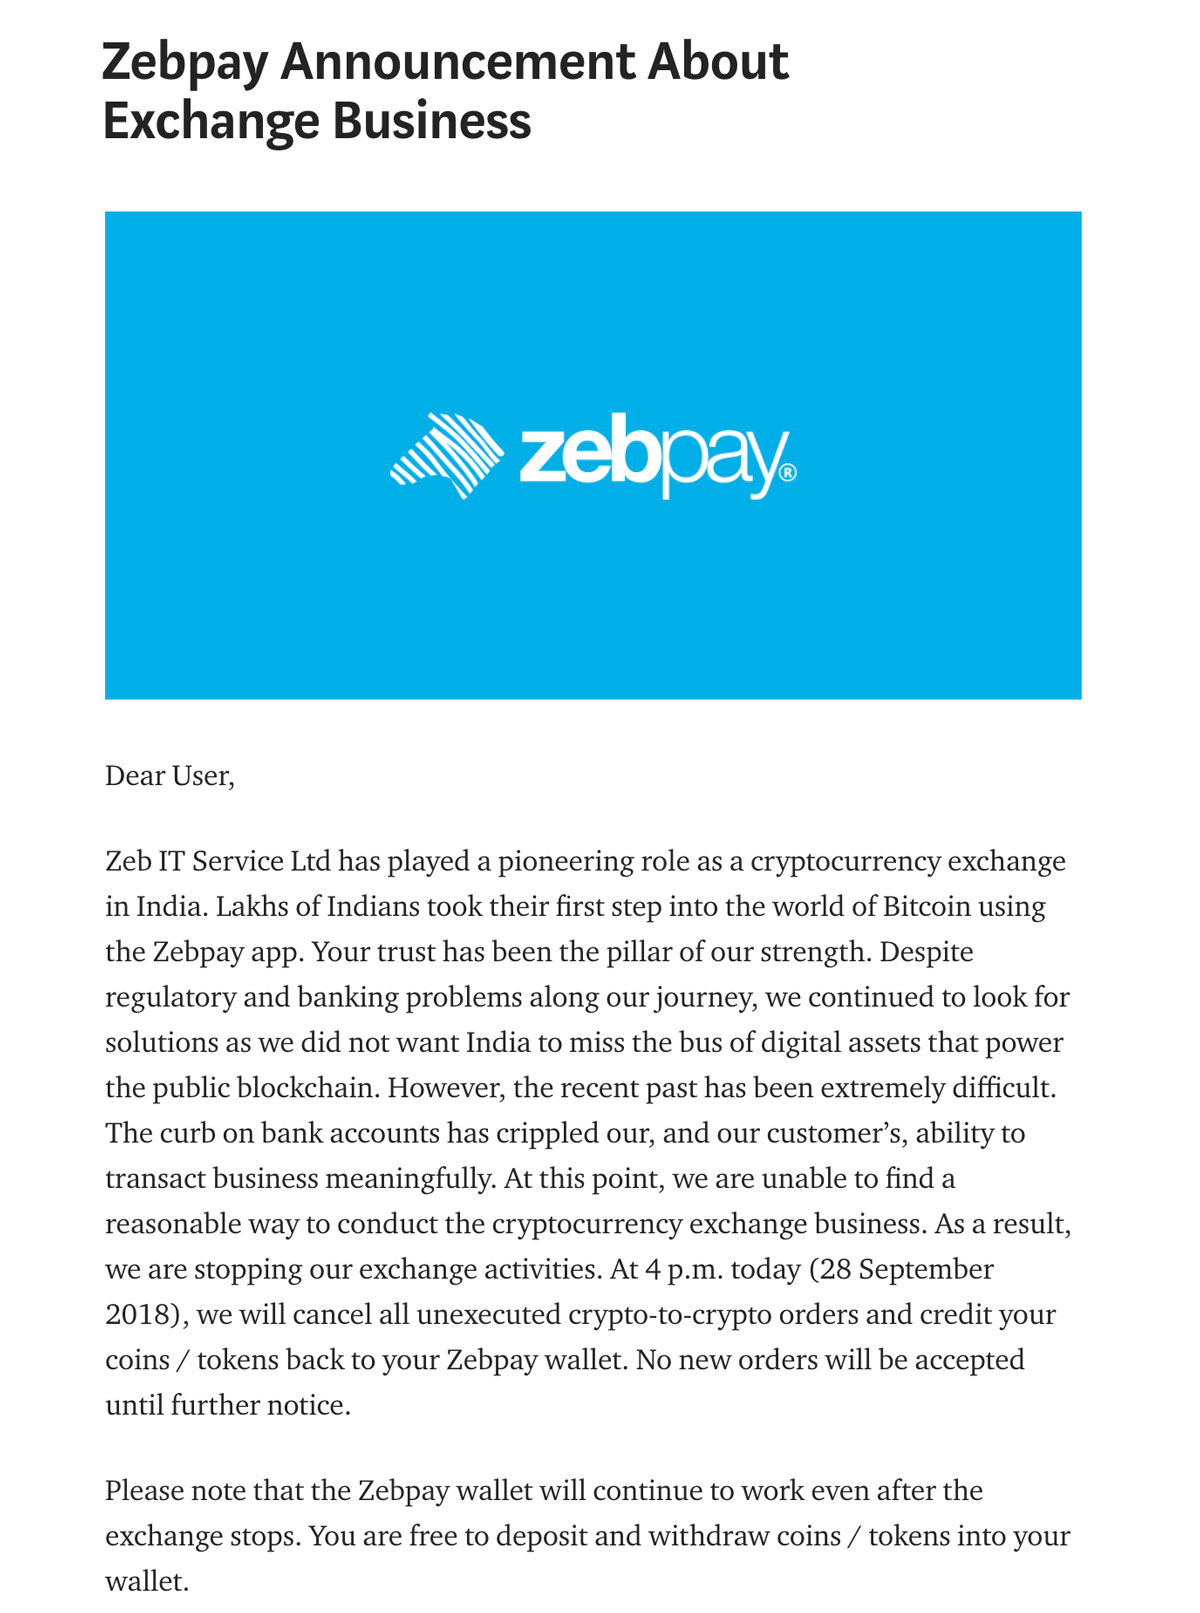 Zebpay's blog post announcing the shutdown of the exchange